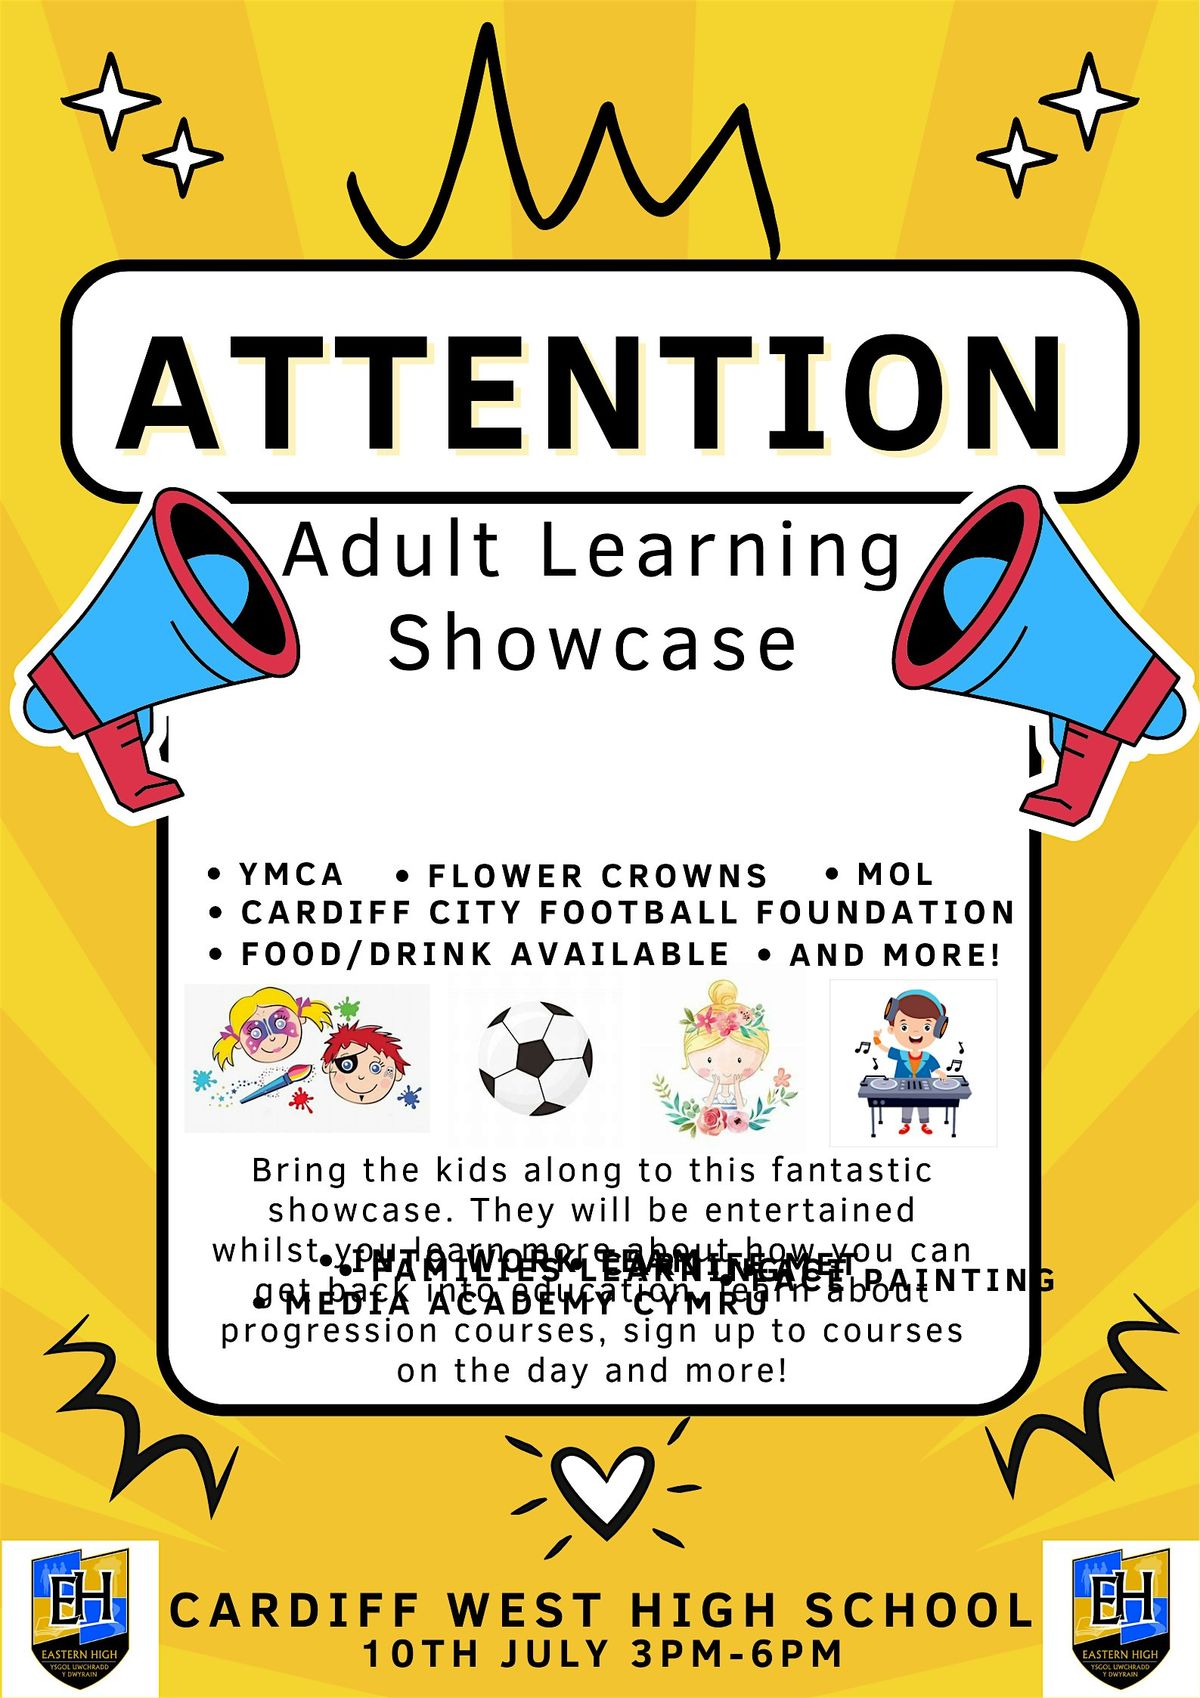 Adult Learning Showcase